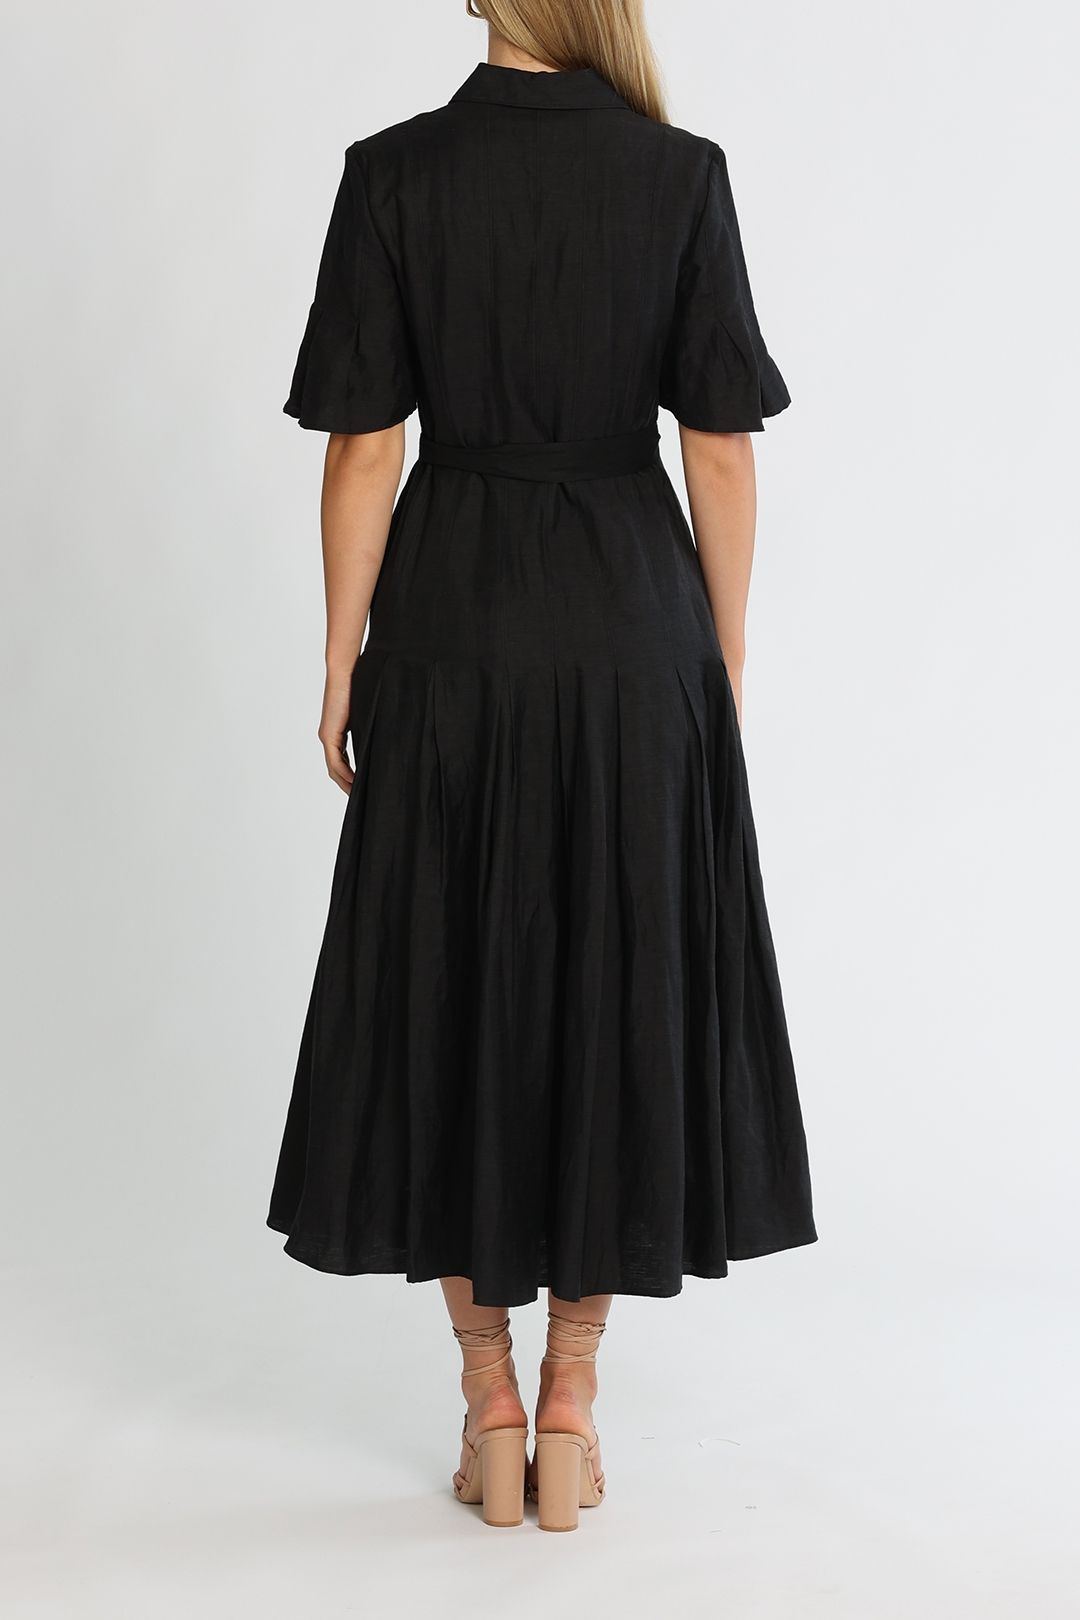 Acler Lockwood Dress Black Collared